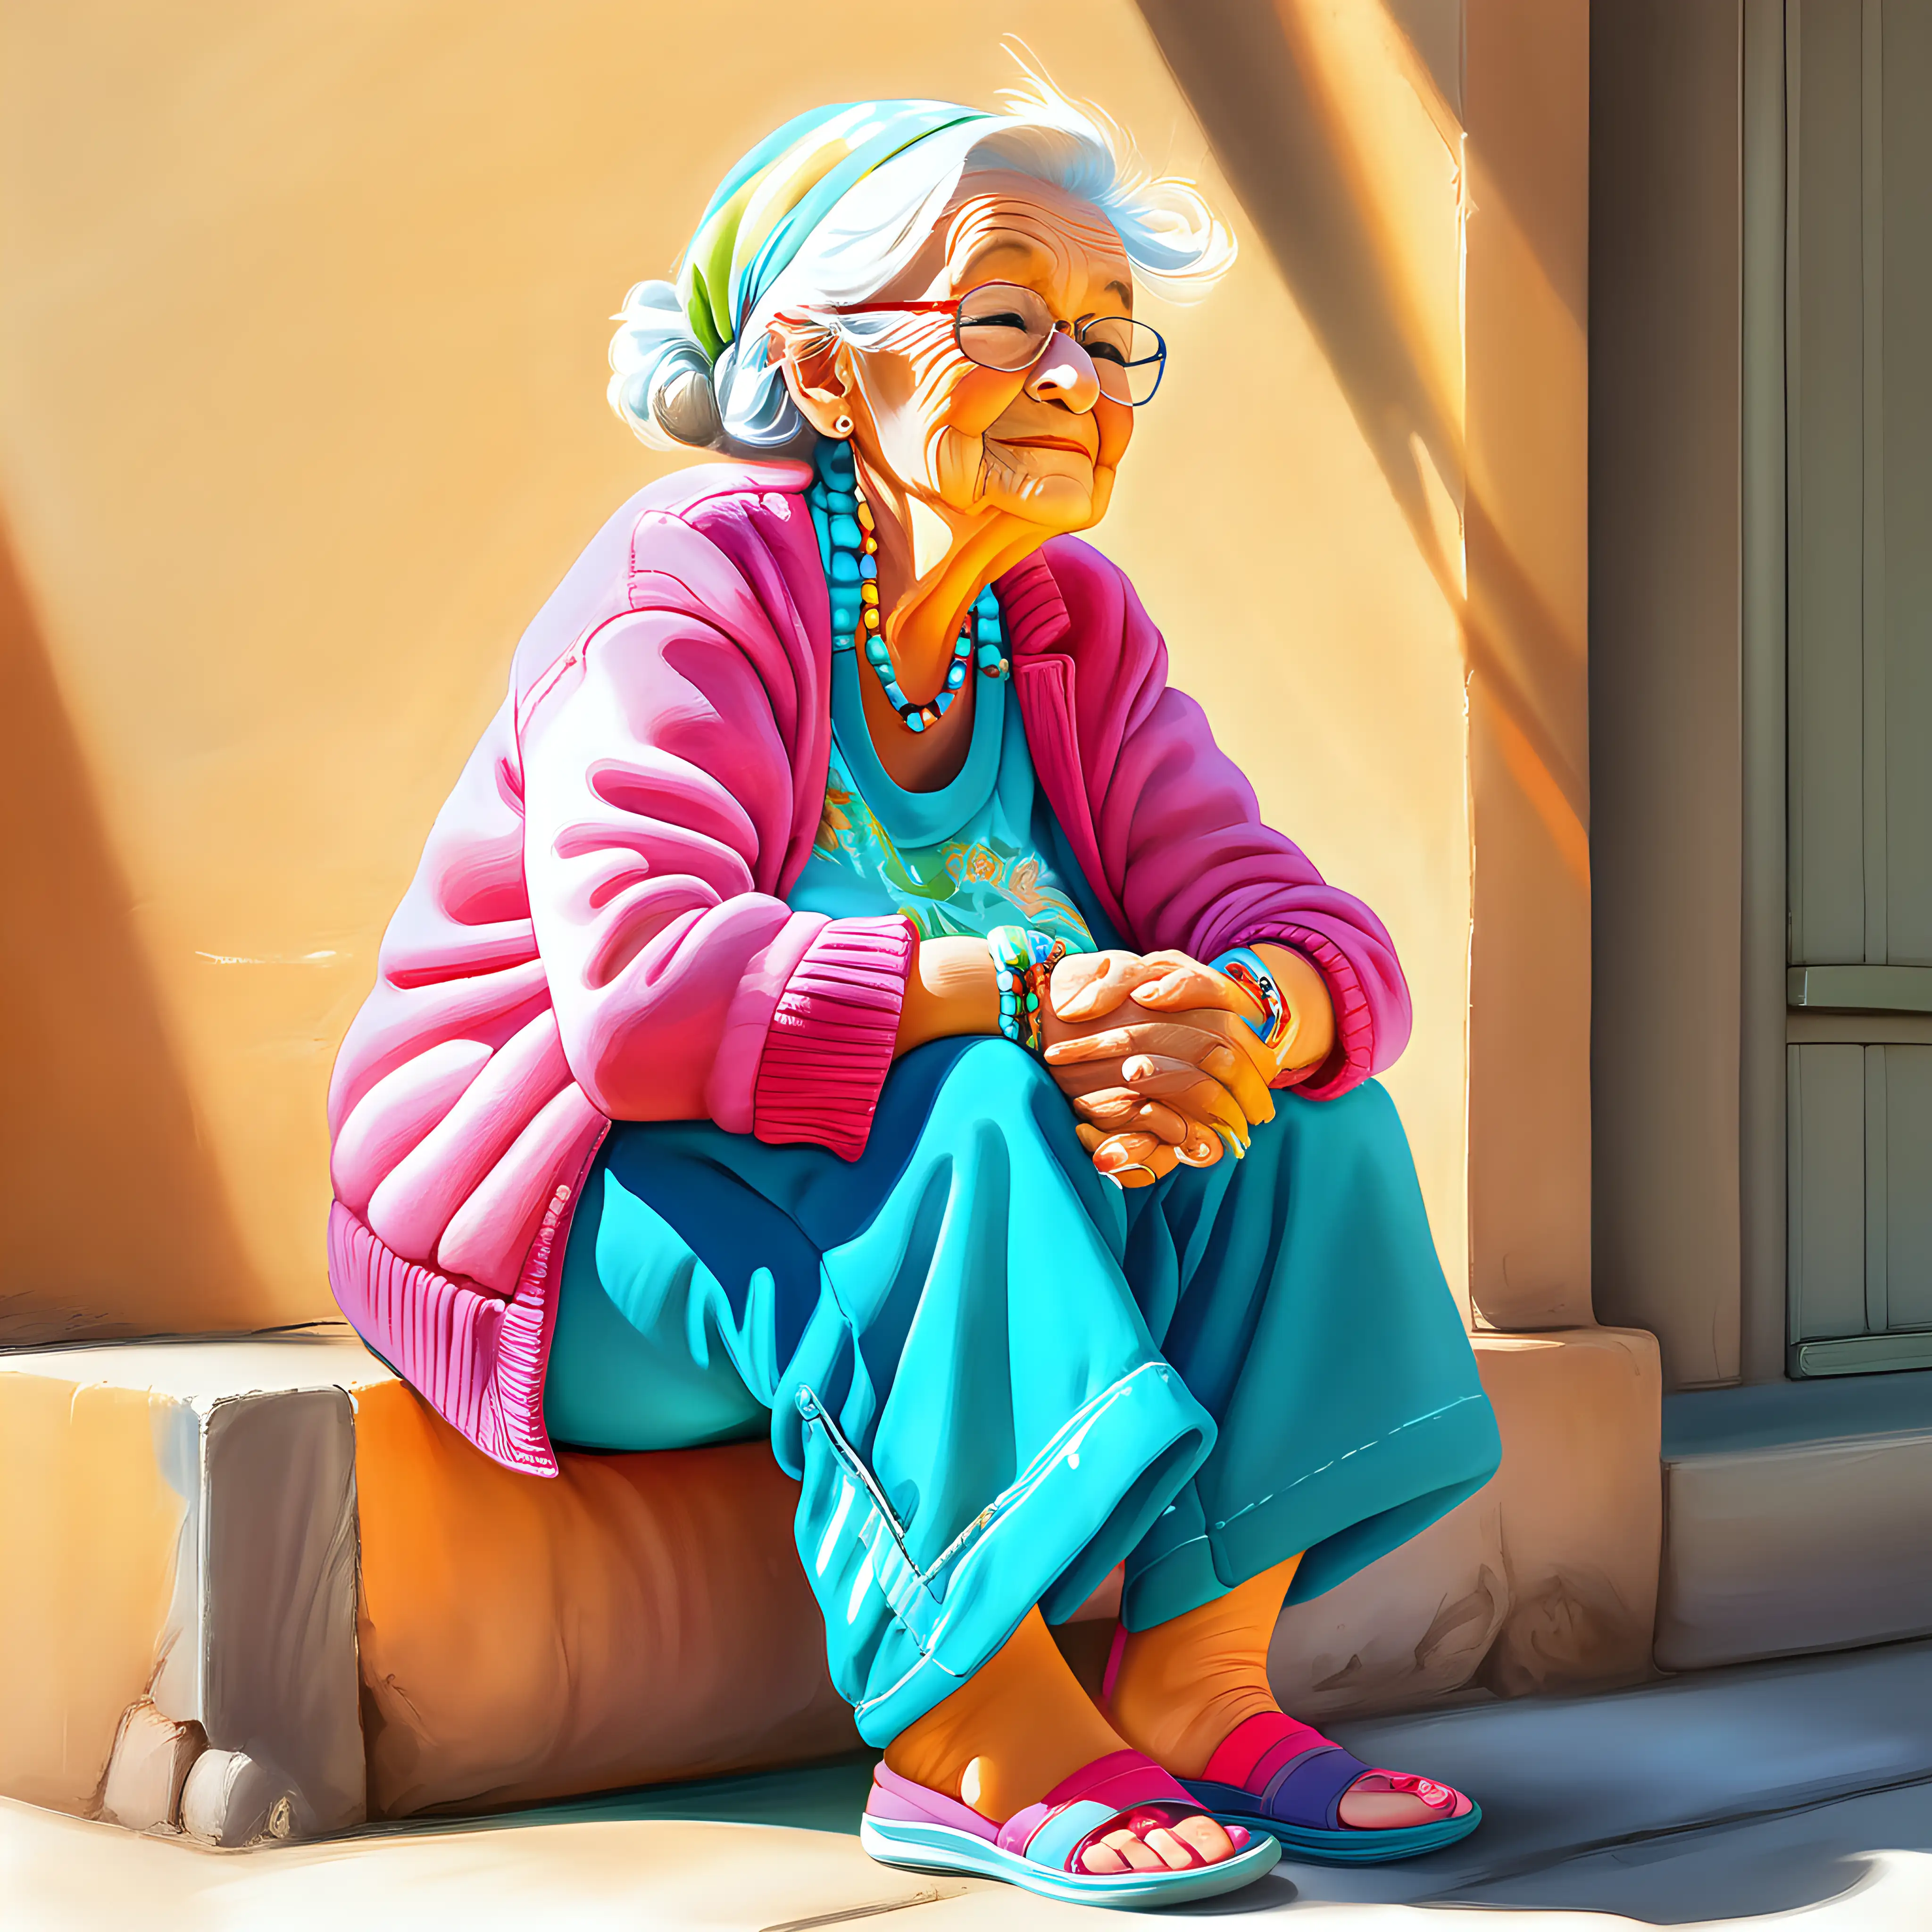 Elderly Woman Basking in Sunlight in Vibrant Attire